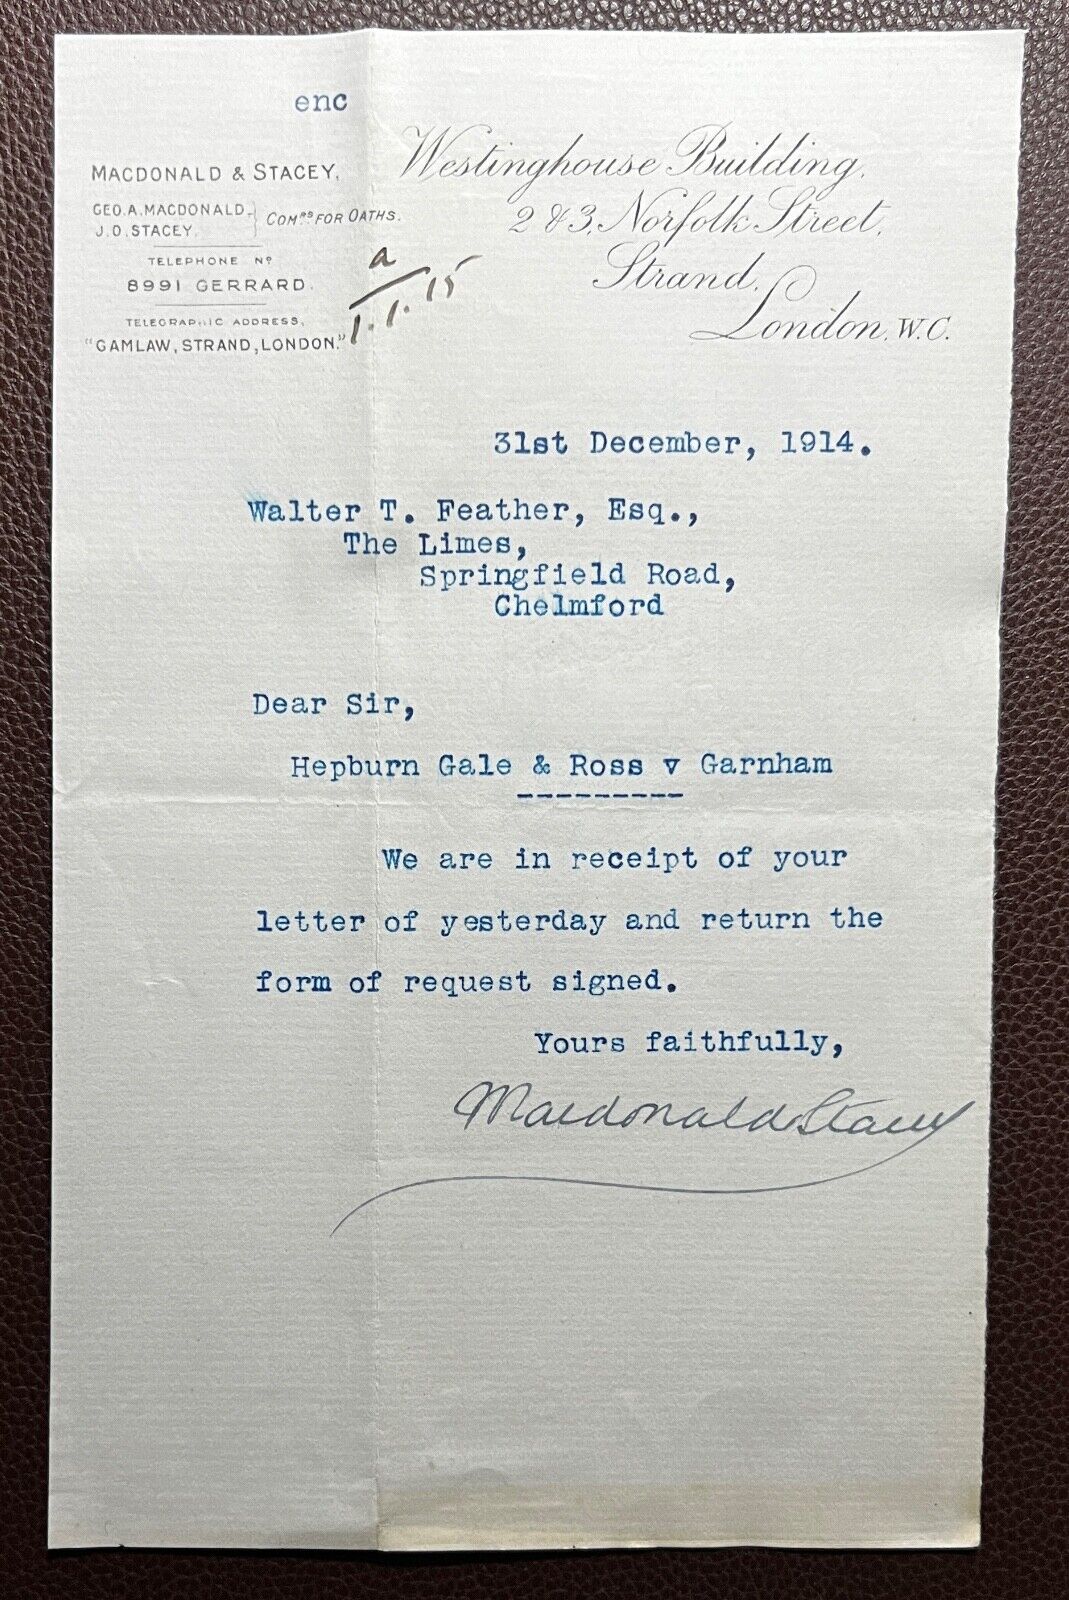 1914 Macdonald & Stacey, Norfolk Street, Strand, London Letter